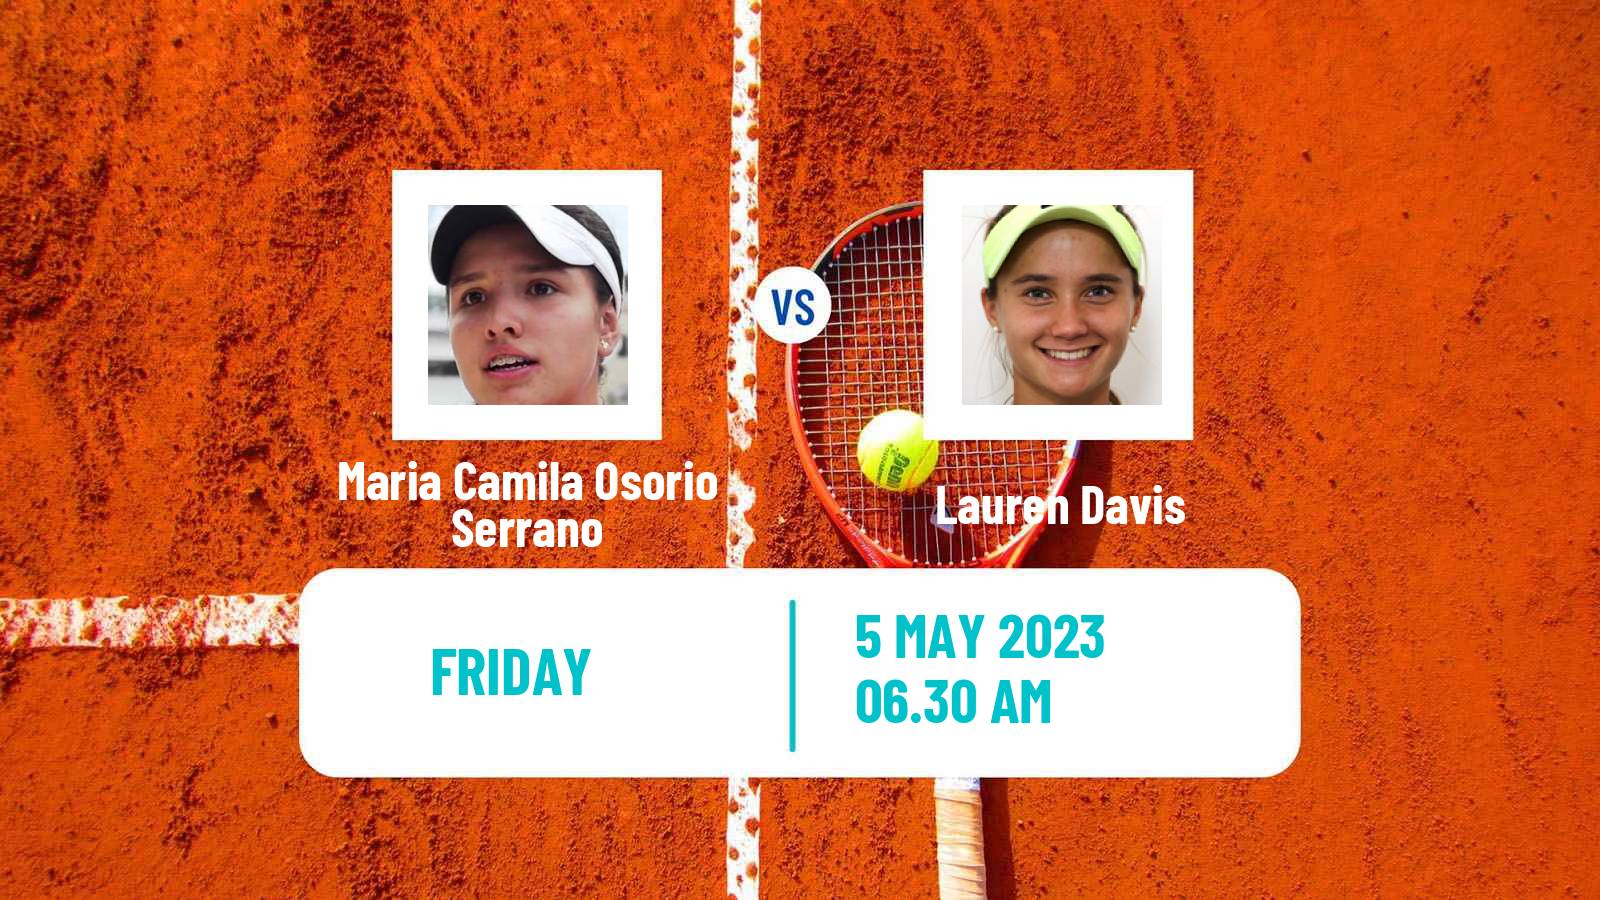 Tennis ATP Challenger Maria Camila Osorio Serrano - Lauren Davis